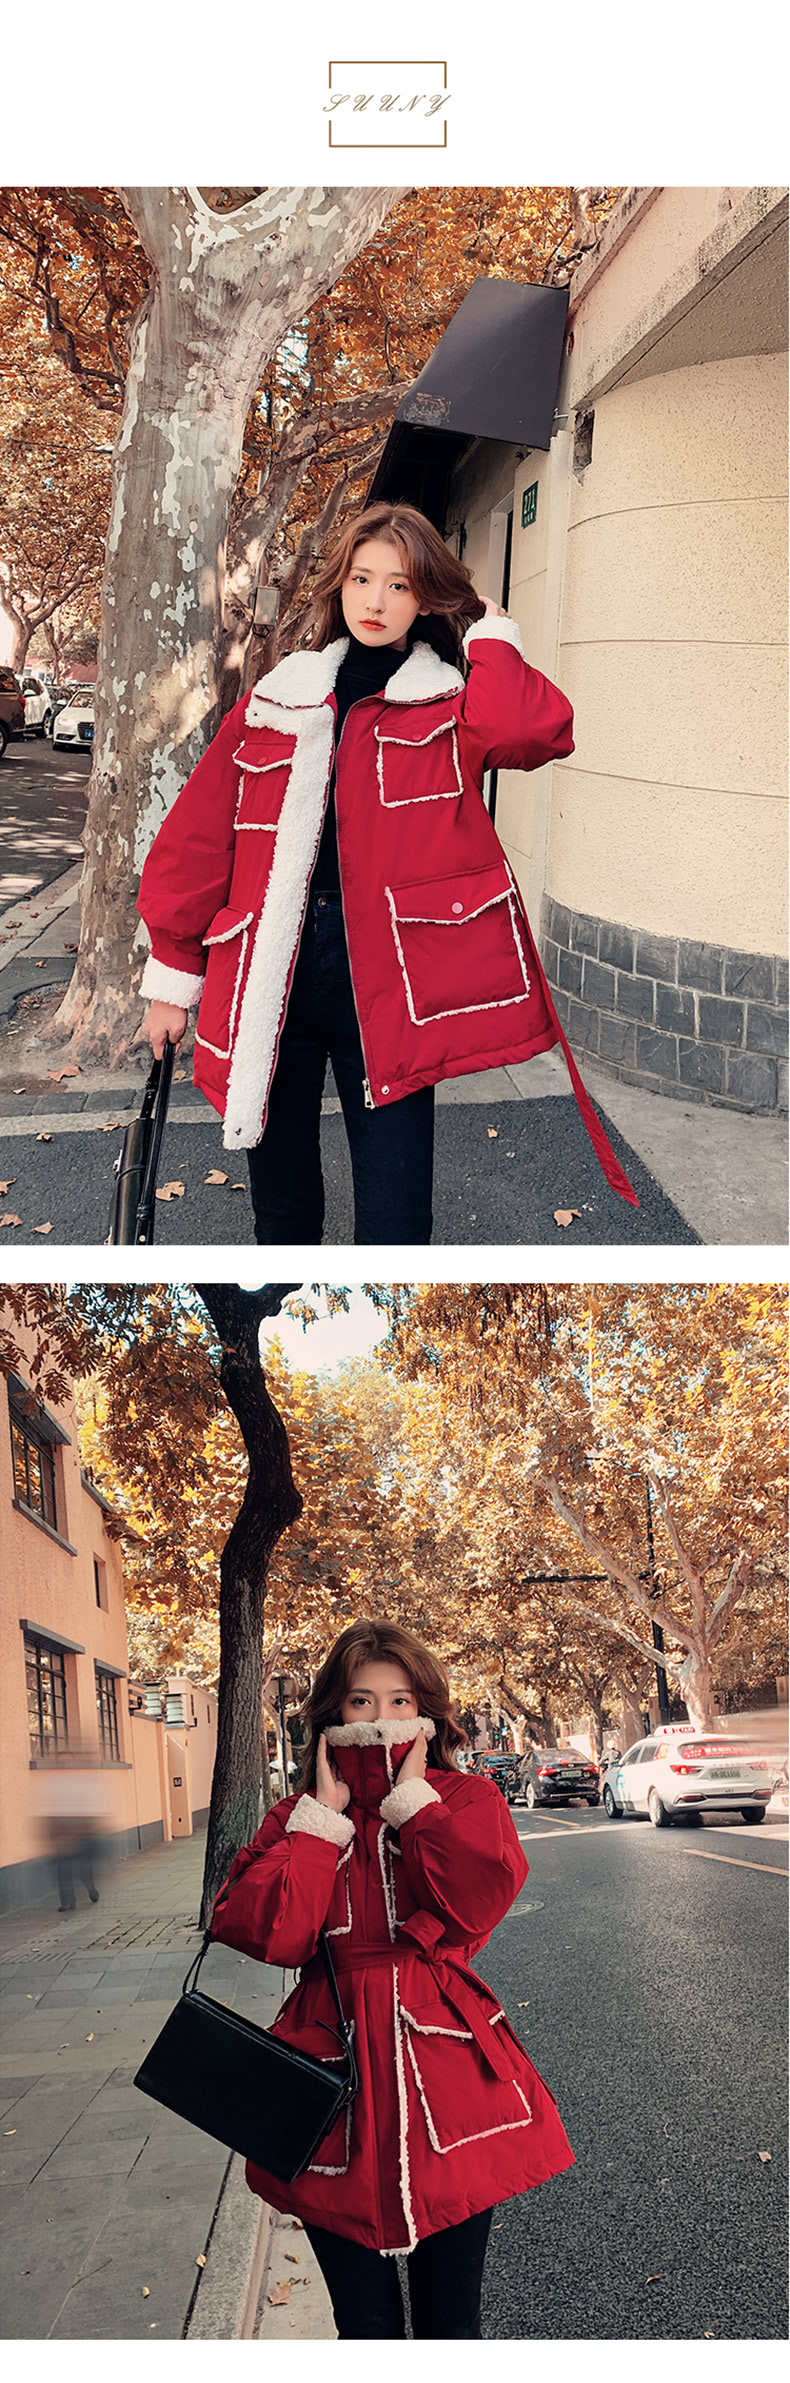 Womens-Fashion-Red-Cotton-Coat-Warm-Wool-Blend-Outerwear15.jpg